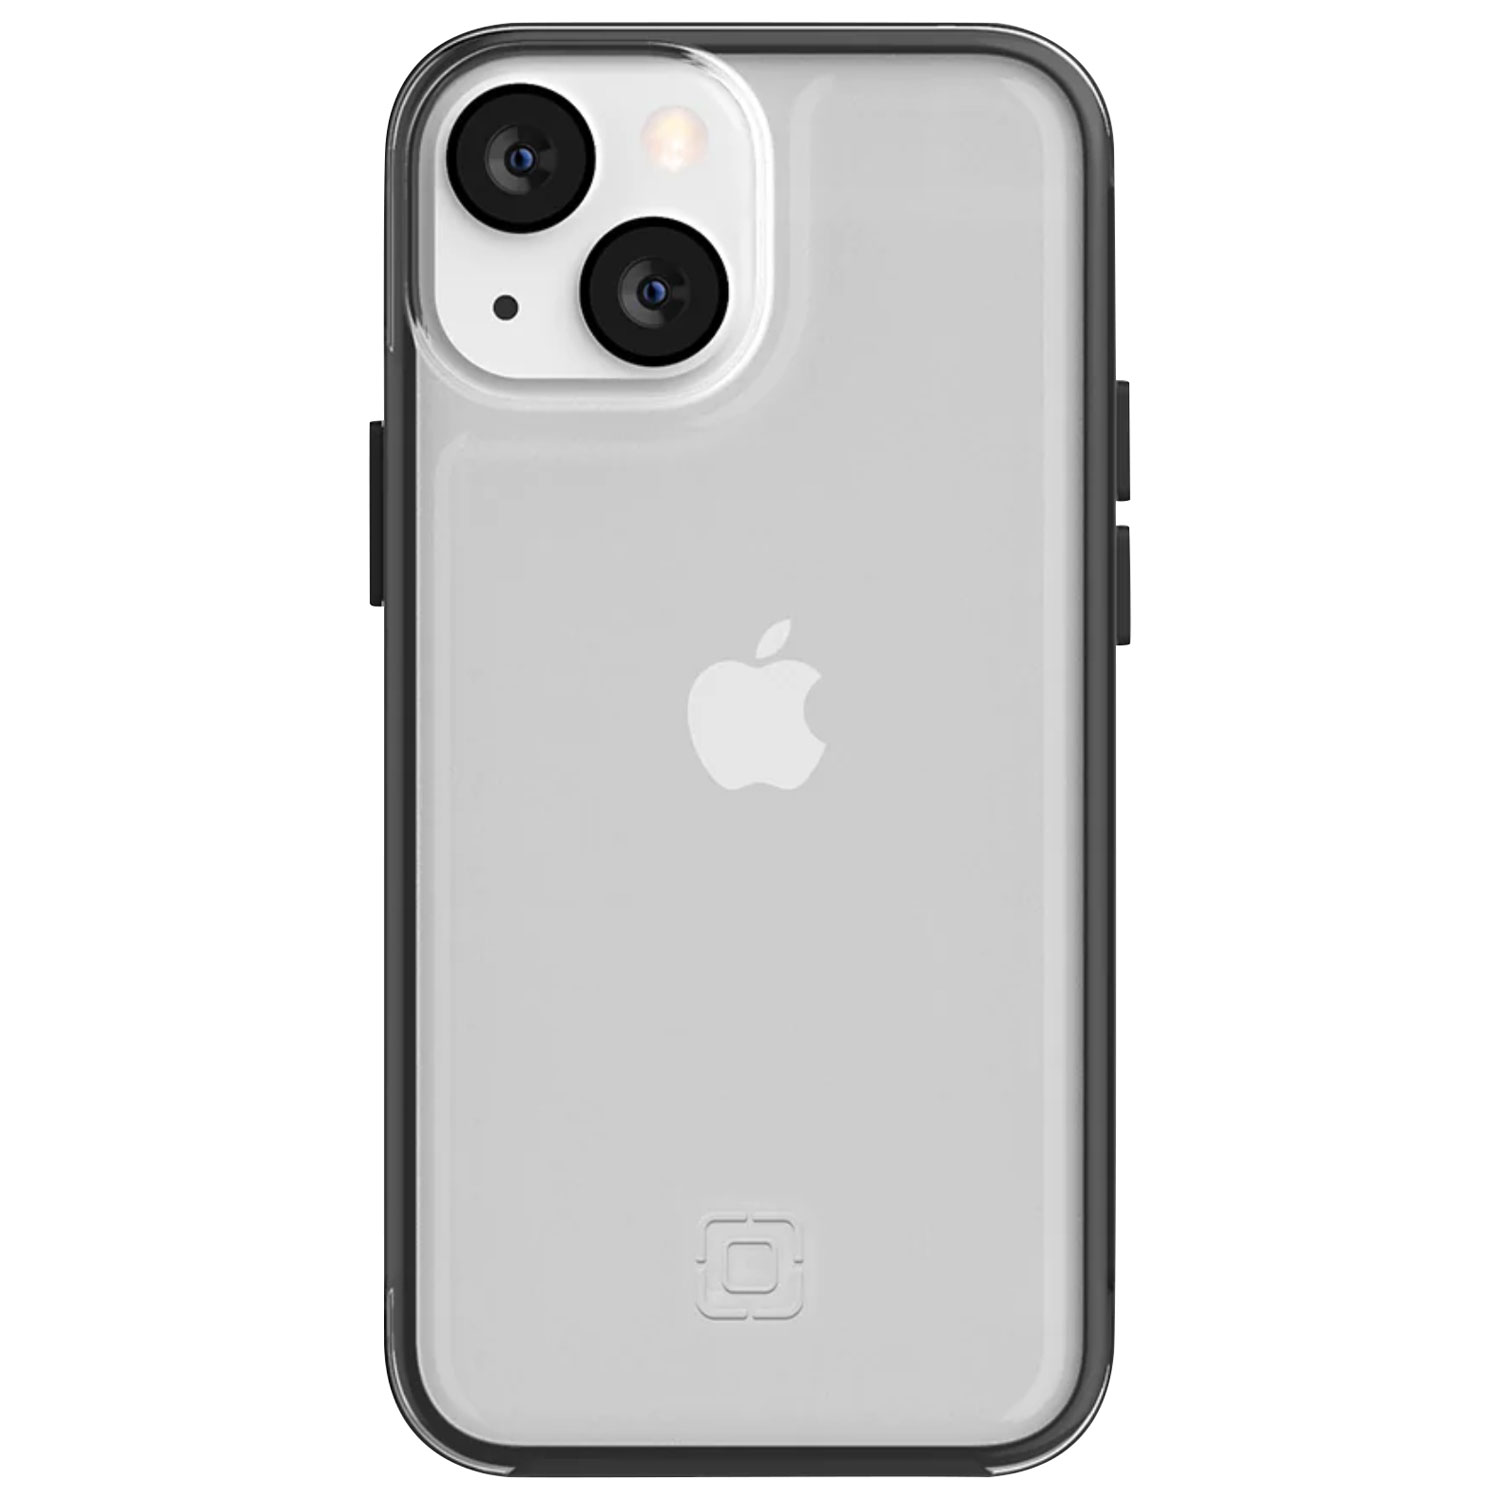 Incipio Organicore Fitted Hard Shell Case for iPhone 13 mini - Clear/Black